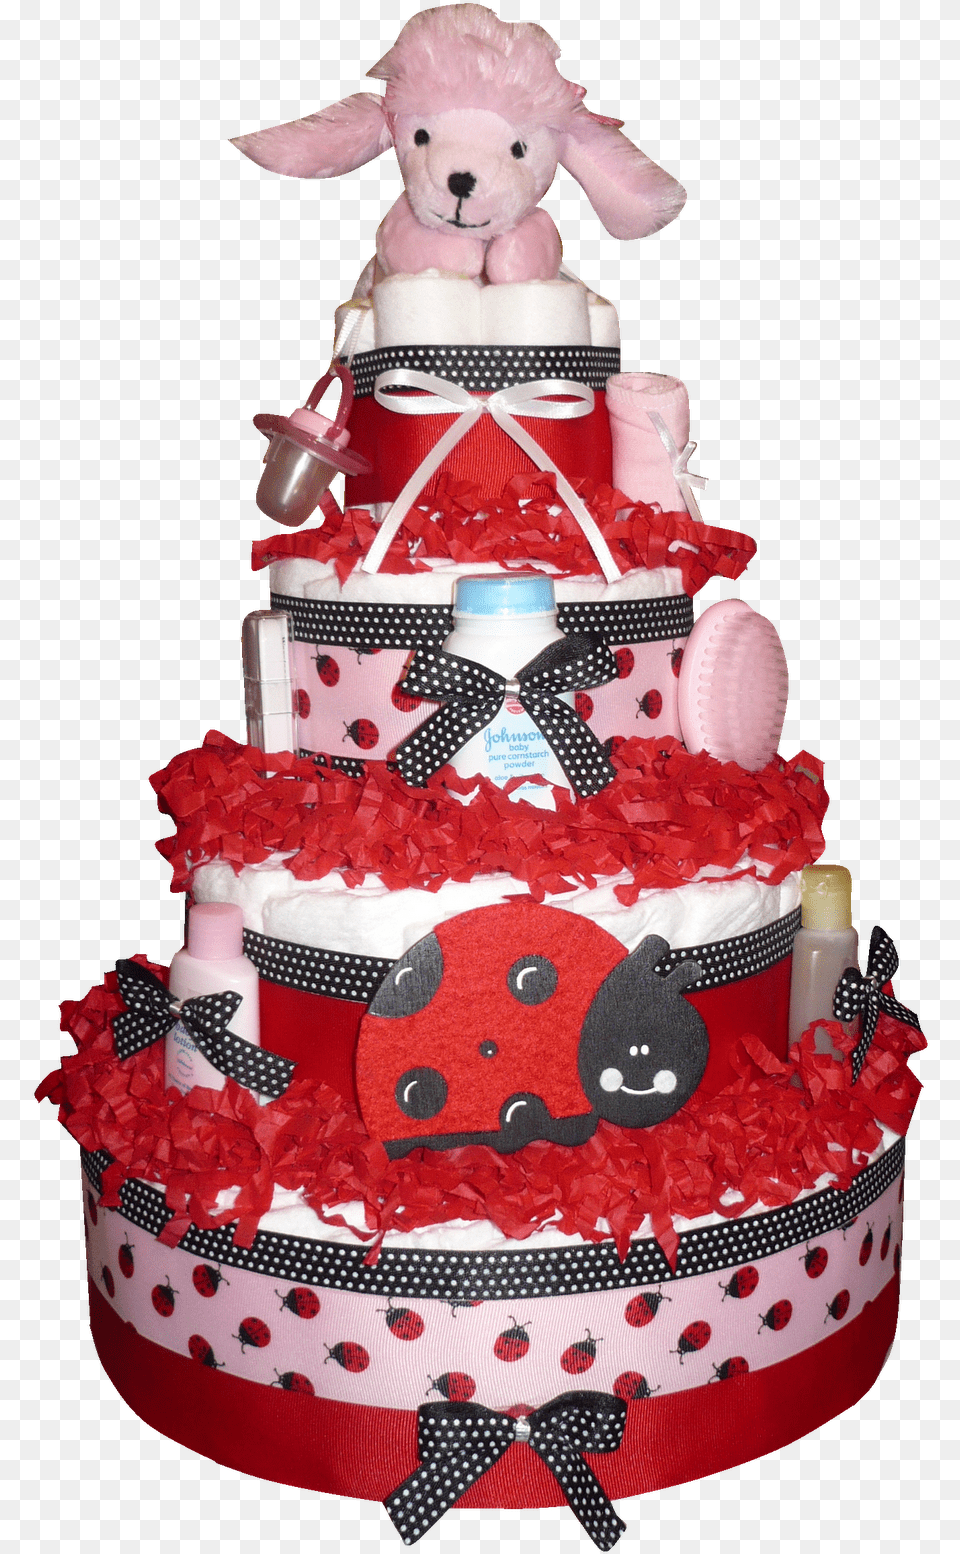 Girly And Pink Sweet 16 Cake Cake Decorating, Dessert, Food, Birthday Cake, Cream Free Png